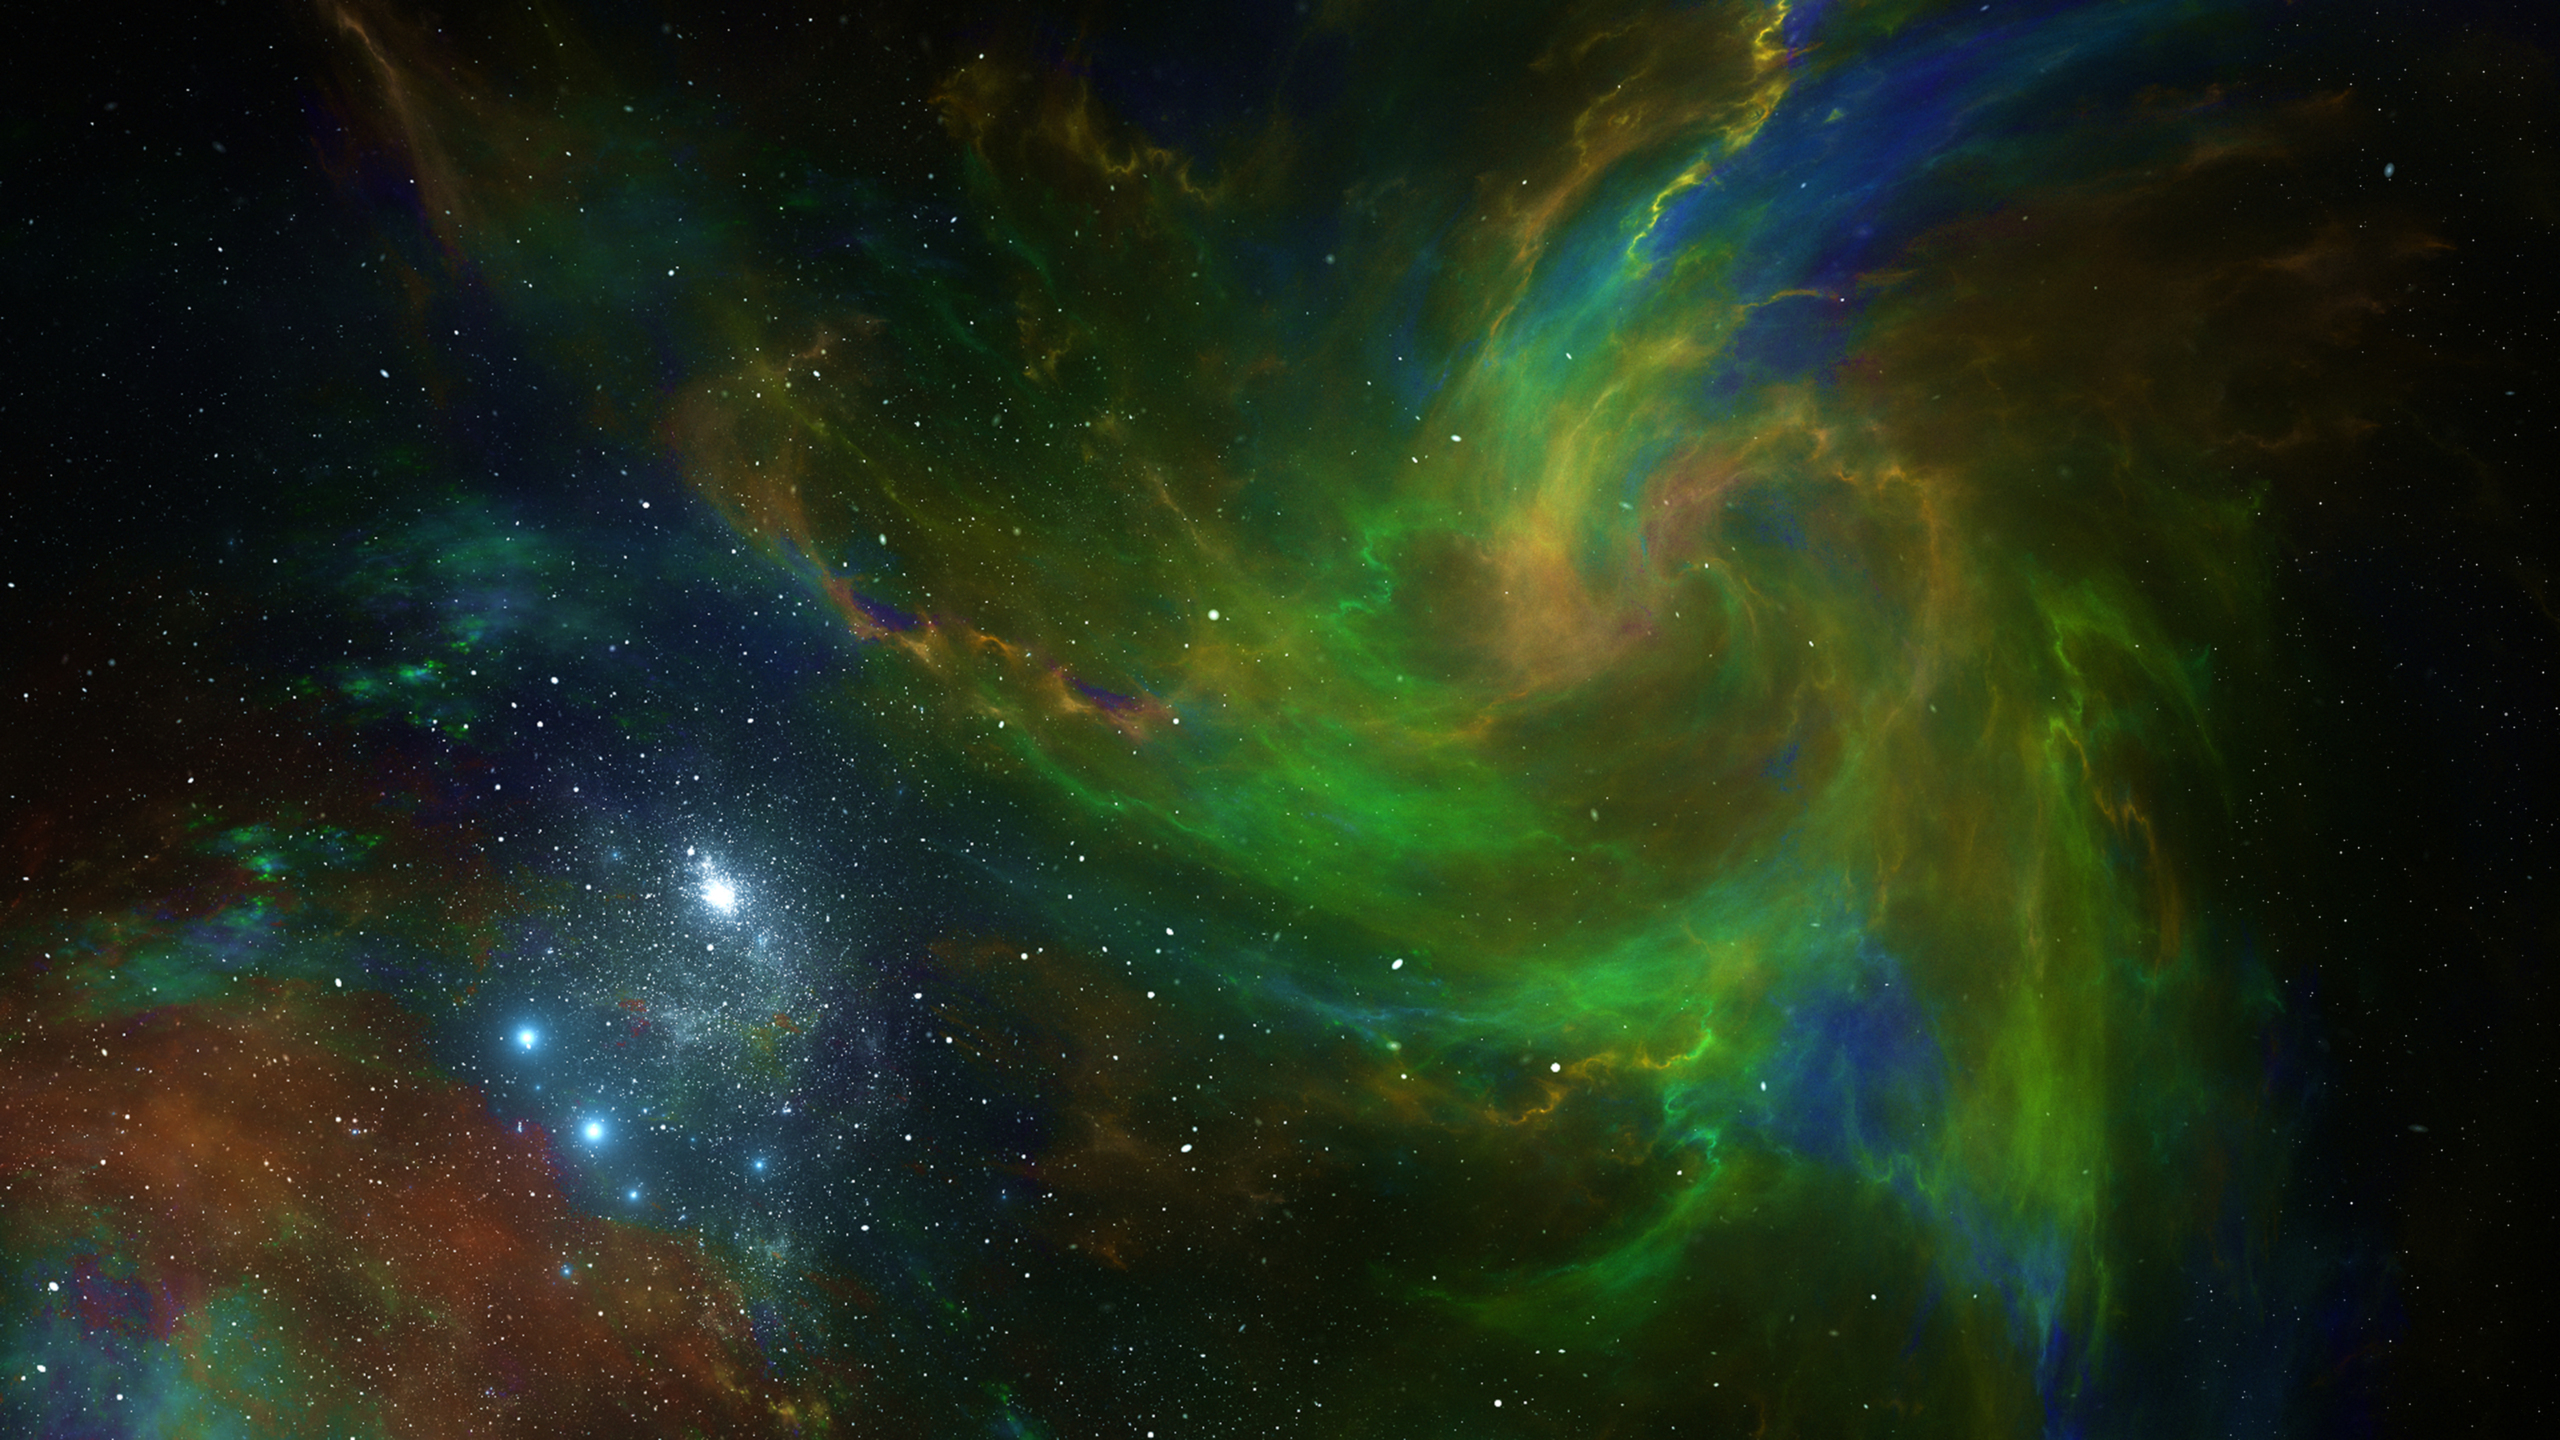 Space Stars Nebula 4k Hd Digital Universe 4k Wallpape